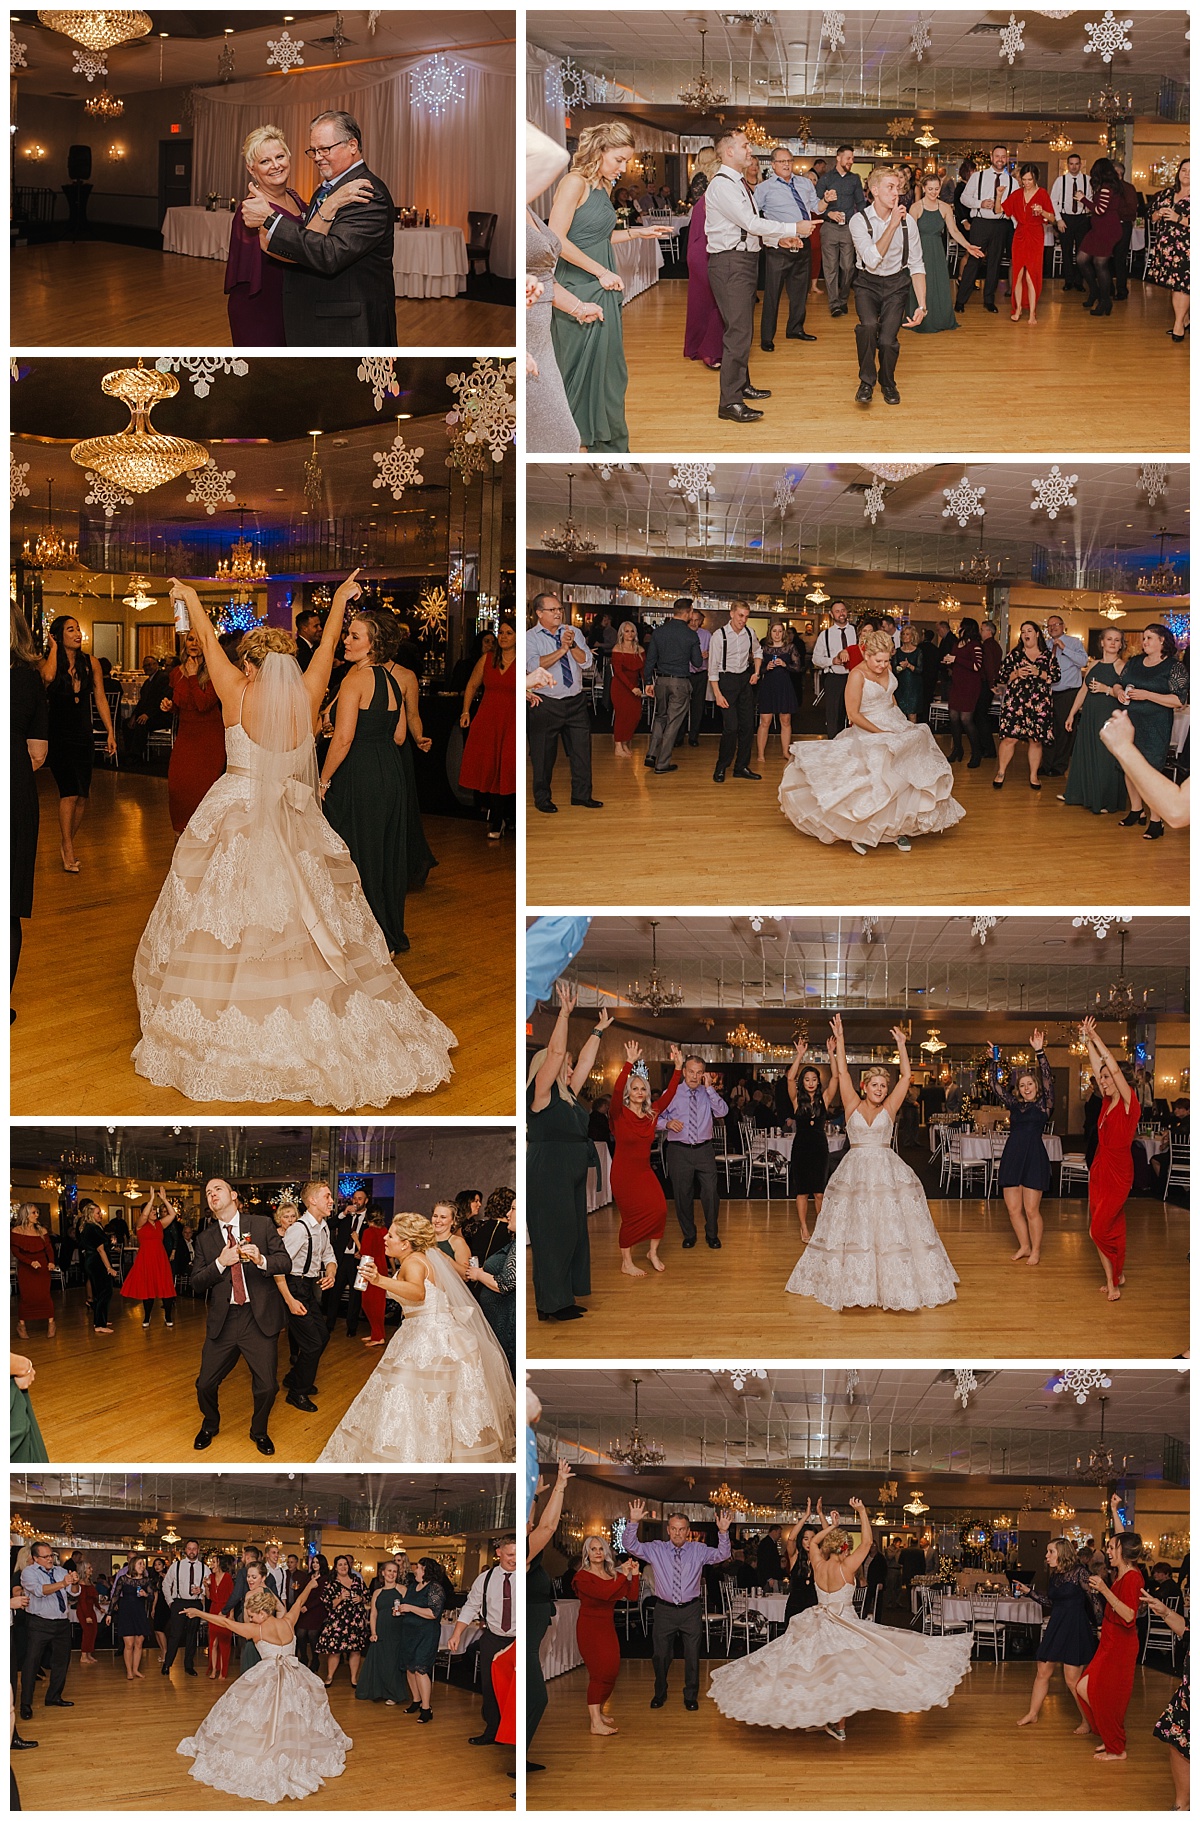 Mr. & Mrs. Lewis - Christmas Themed Wedding - The Hyatt Regency Cleveland at the Arcade - La Vera Party Center- Lindsay Dawn Photography